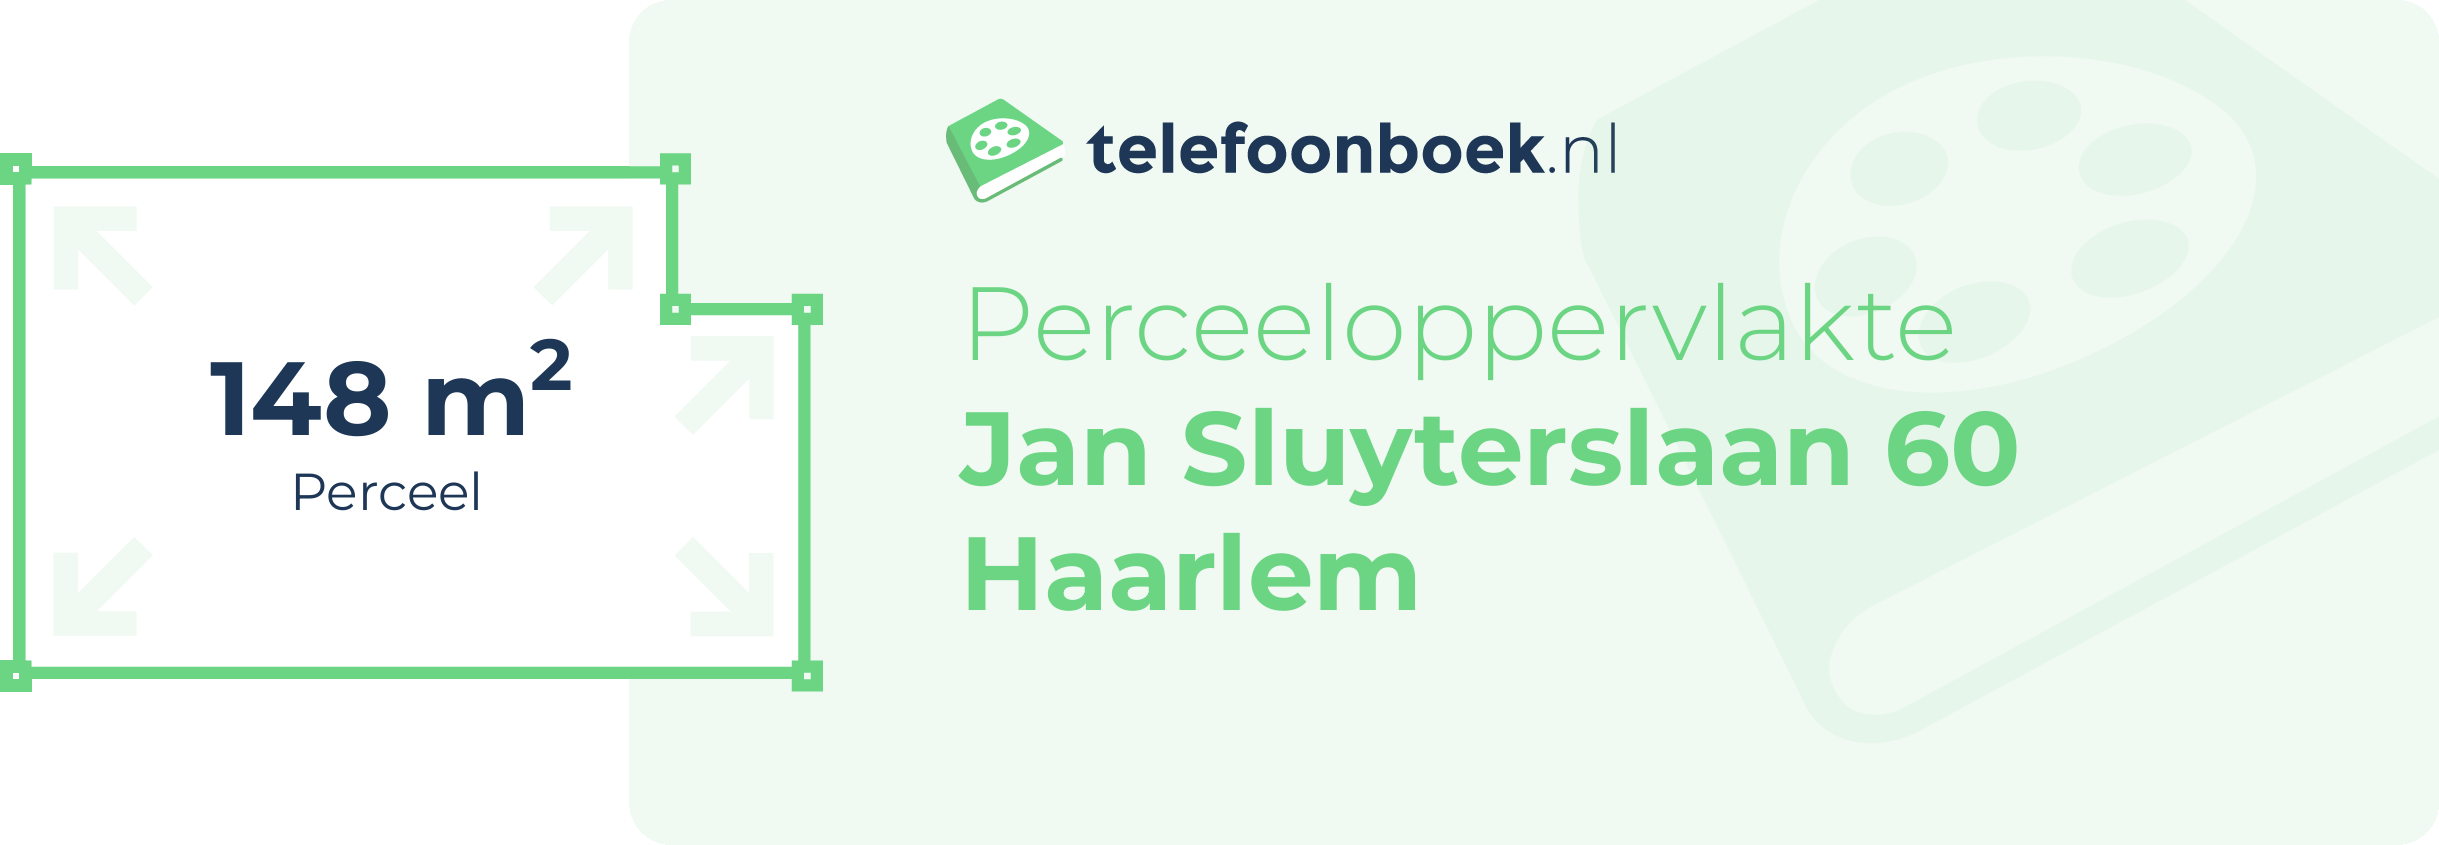 Perceeloppervlakte Jan Sluyterslaan 60 Haarlem